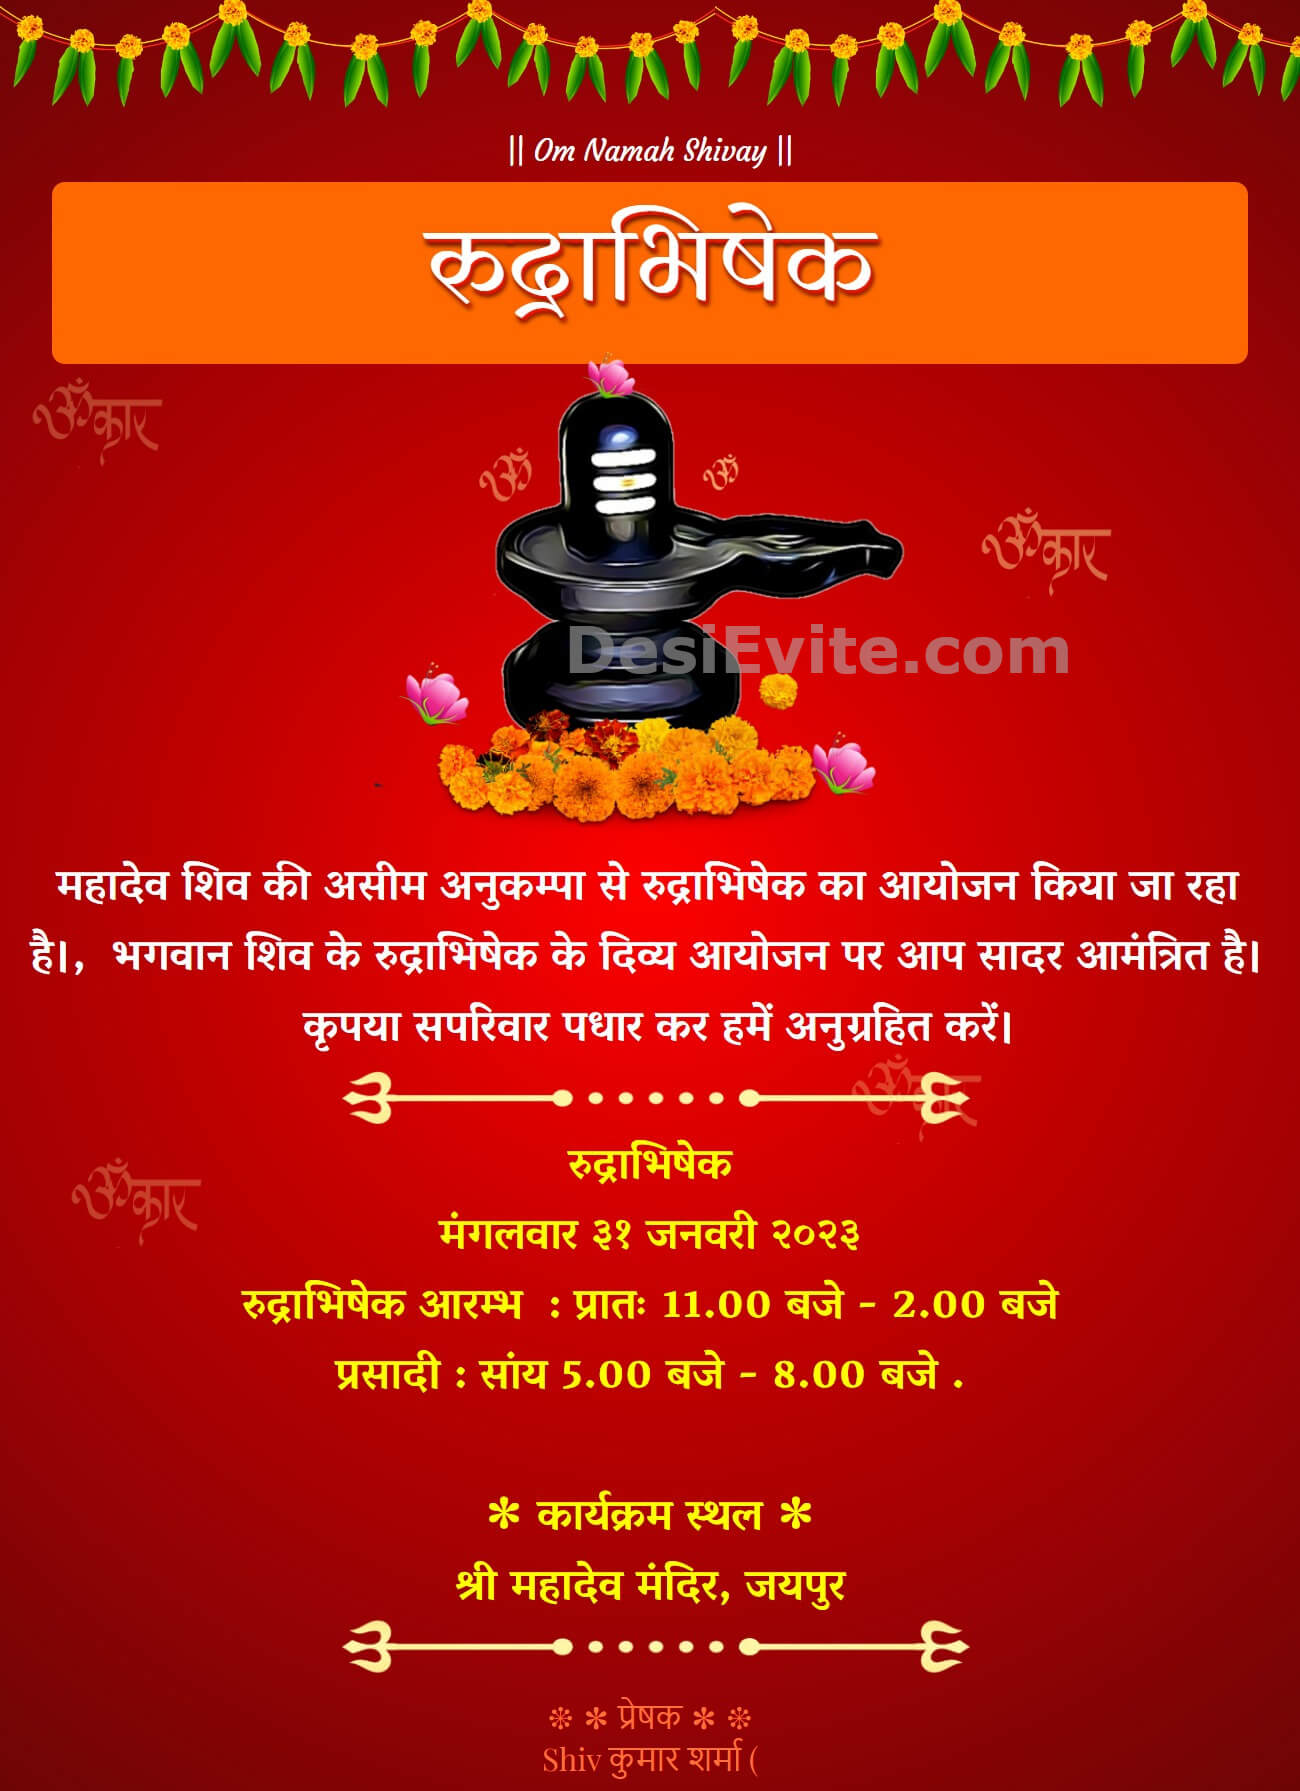 रुद्राभिषेक / Shravan month puja invitation card in hindi